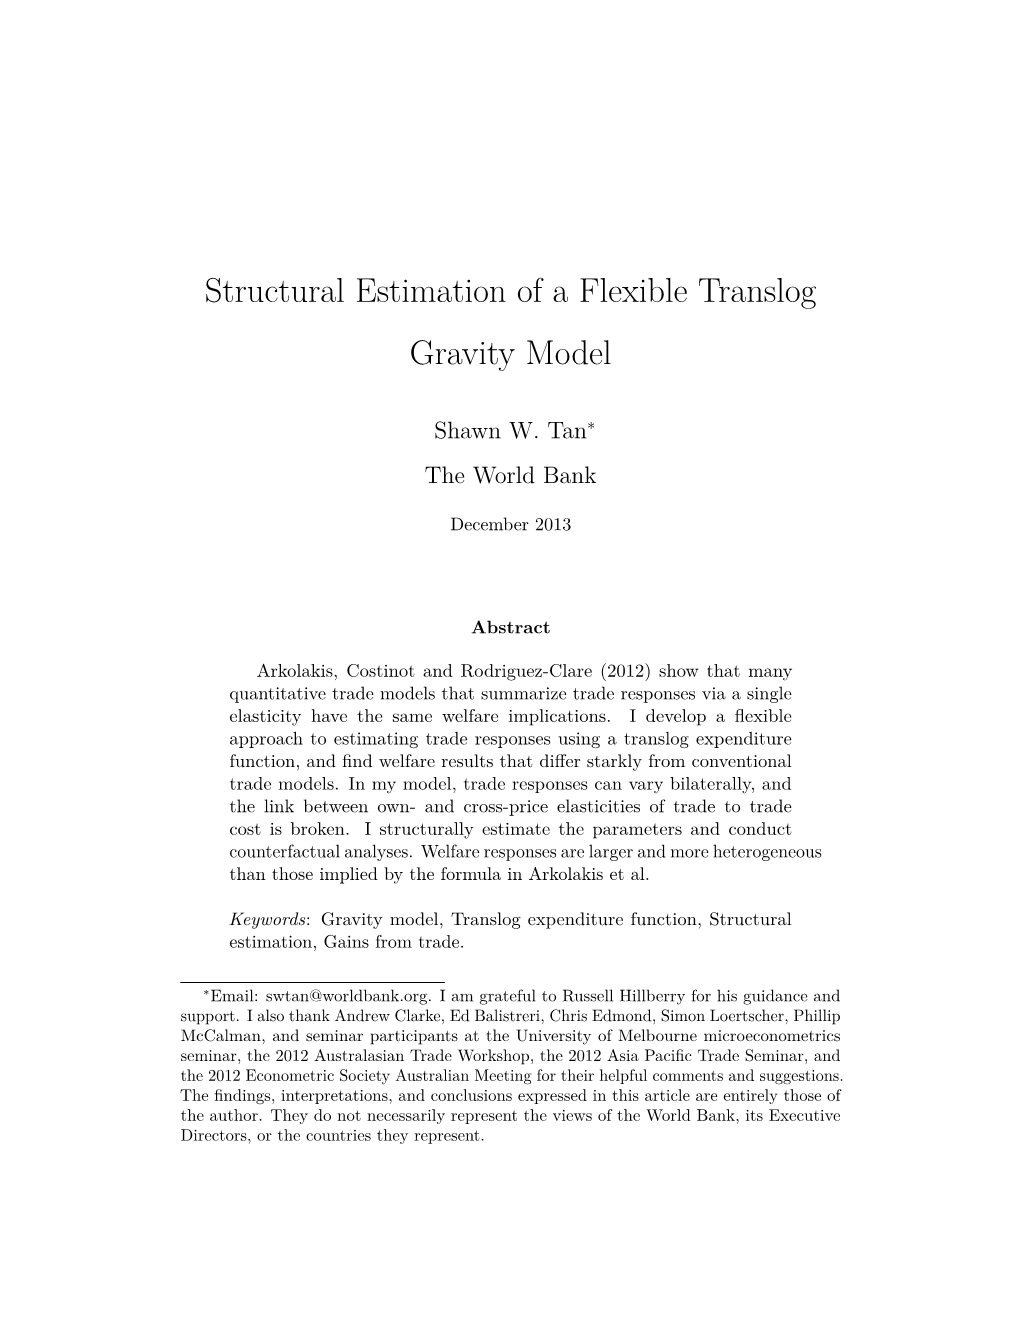 Structural Estimation of a Flexible Translog Gravity Model